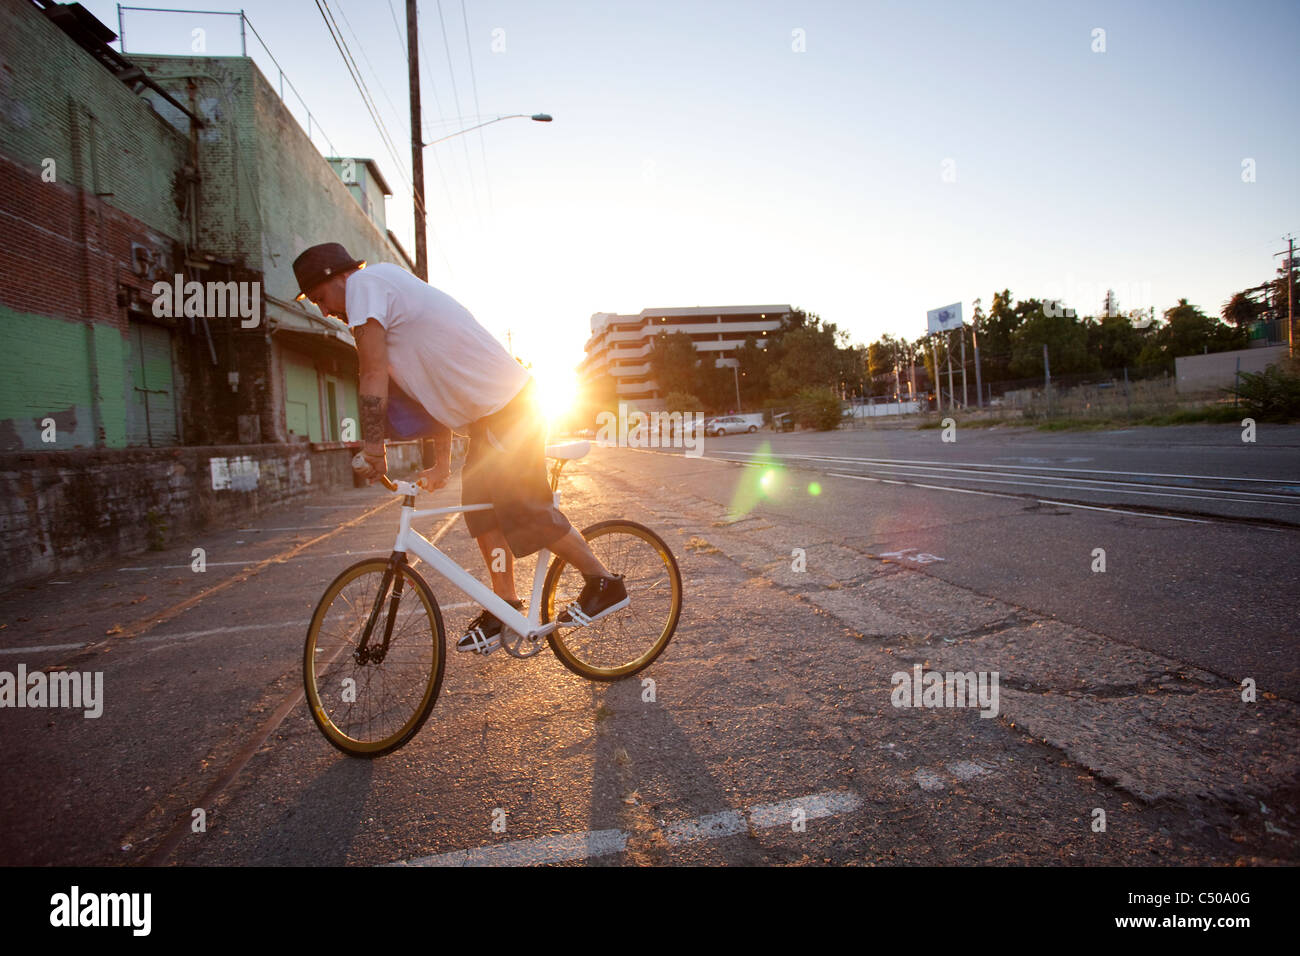 Man doing stunts on bicycle on city street Stock Photo